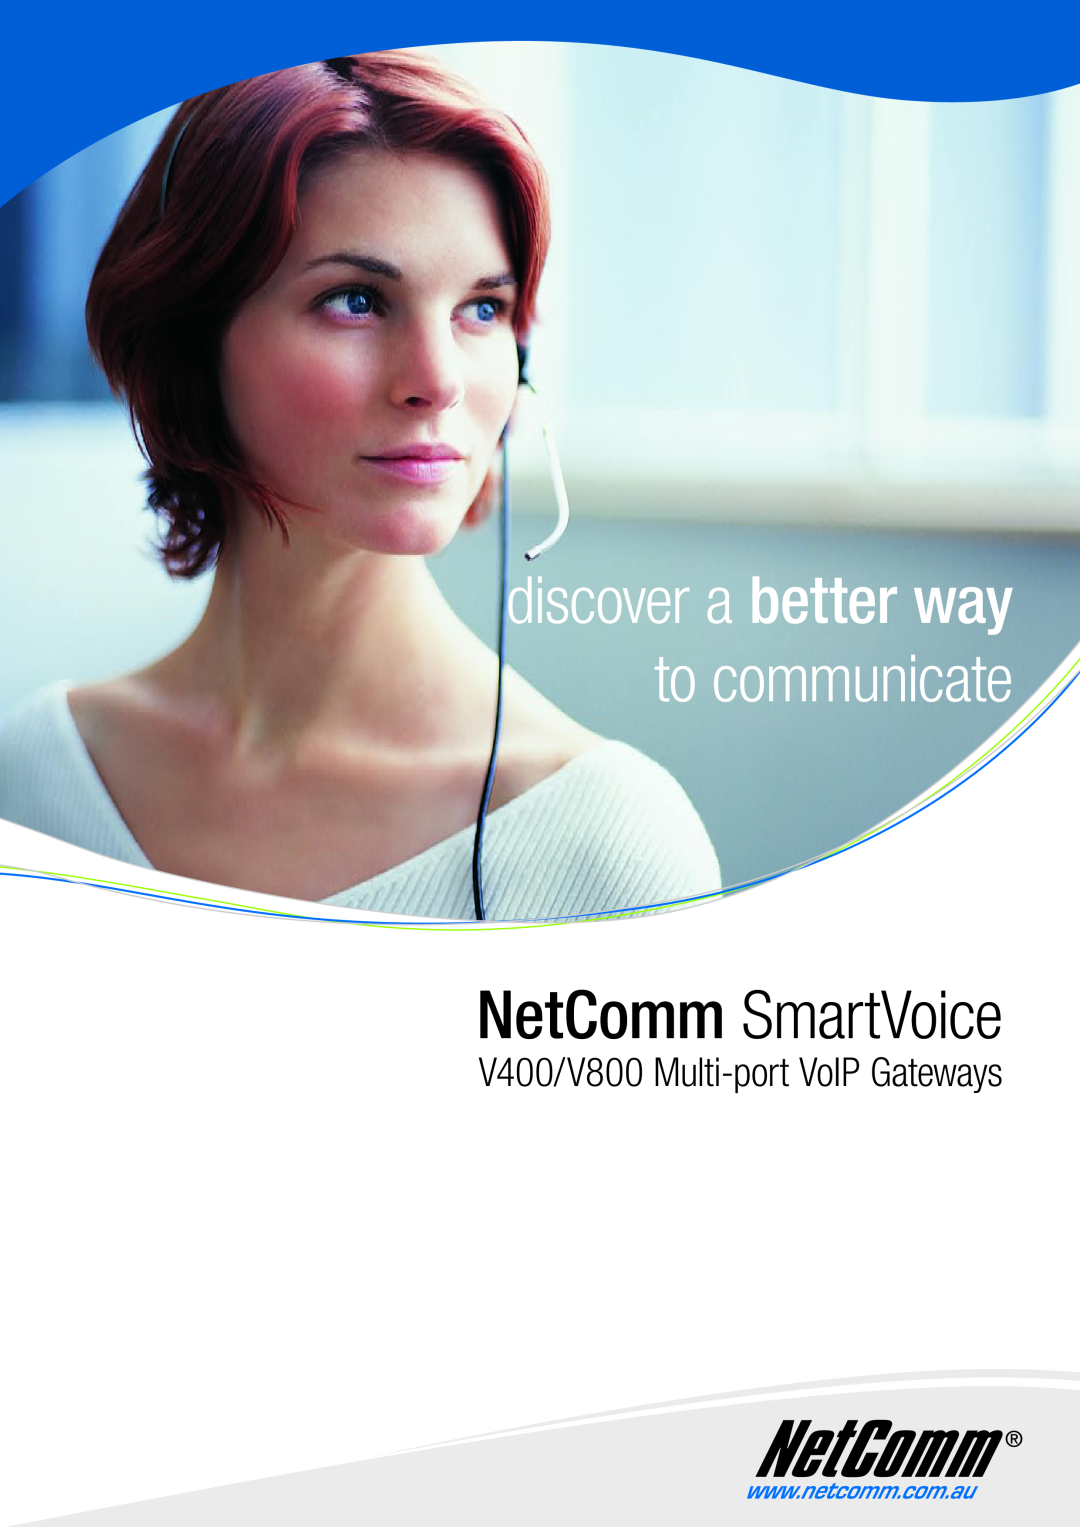 NetComm manual NetComm SmartVoice, discover a better way to communicate, V400/V800 Multi-port VoIP Gateways 